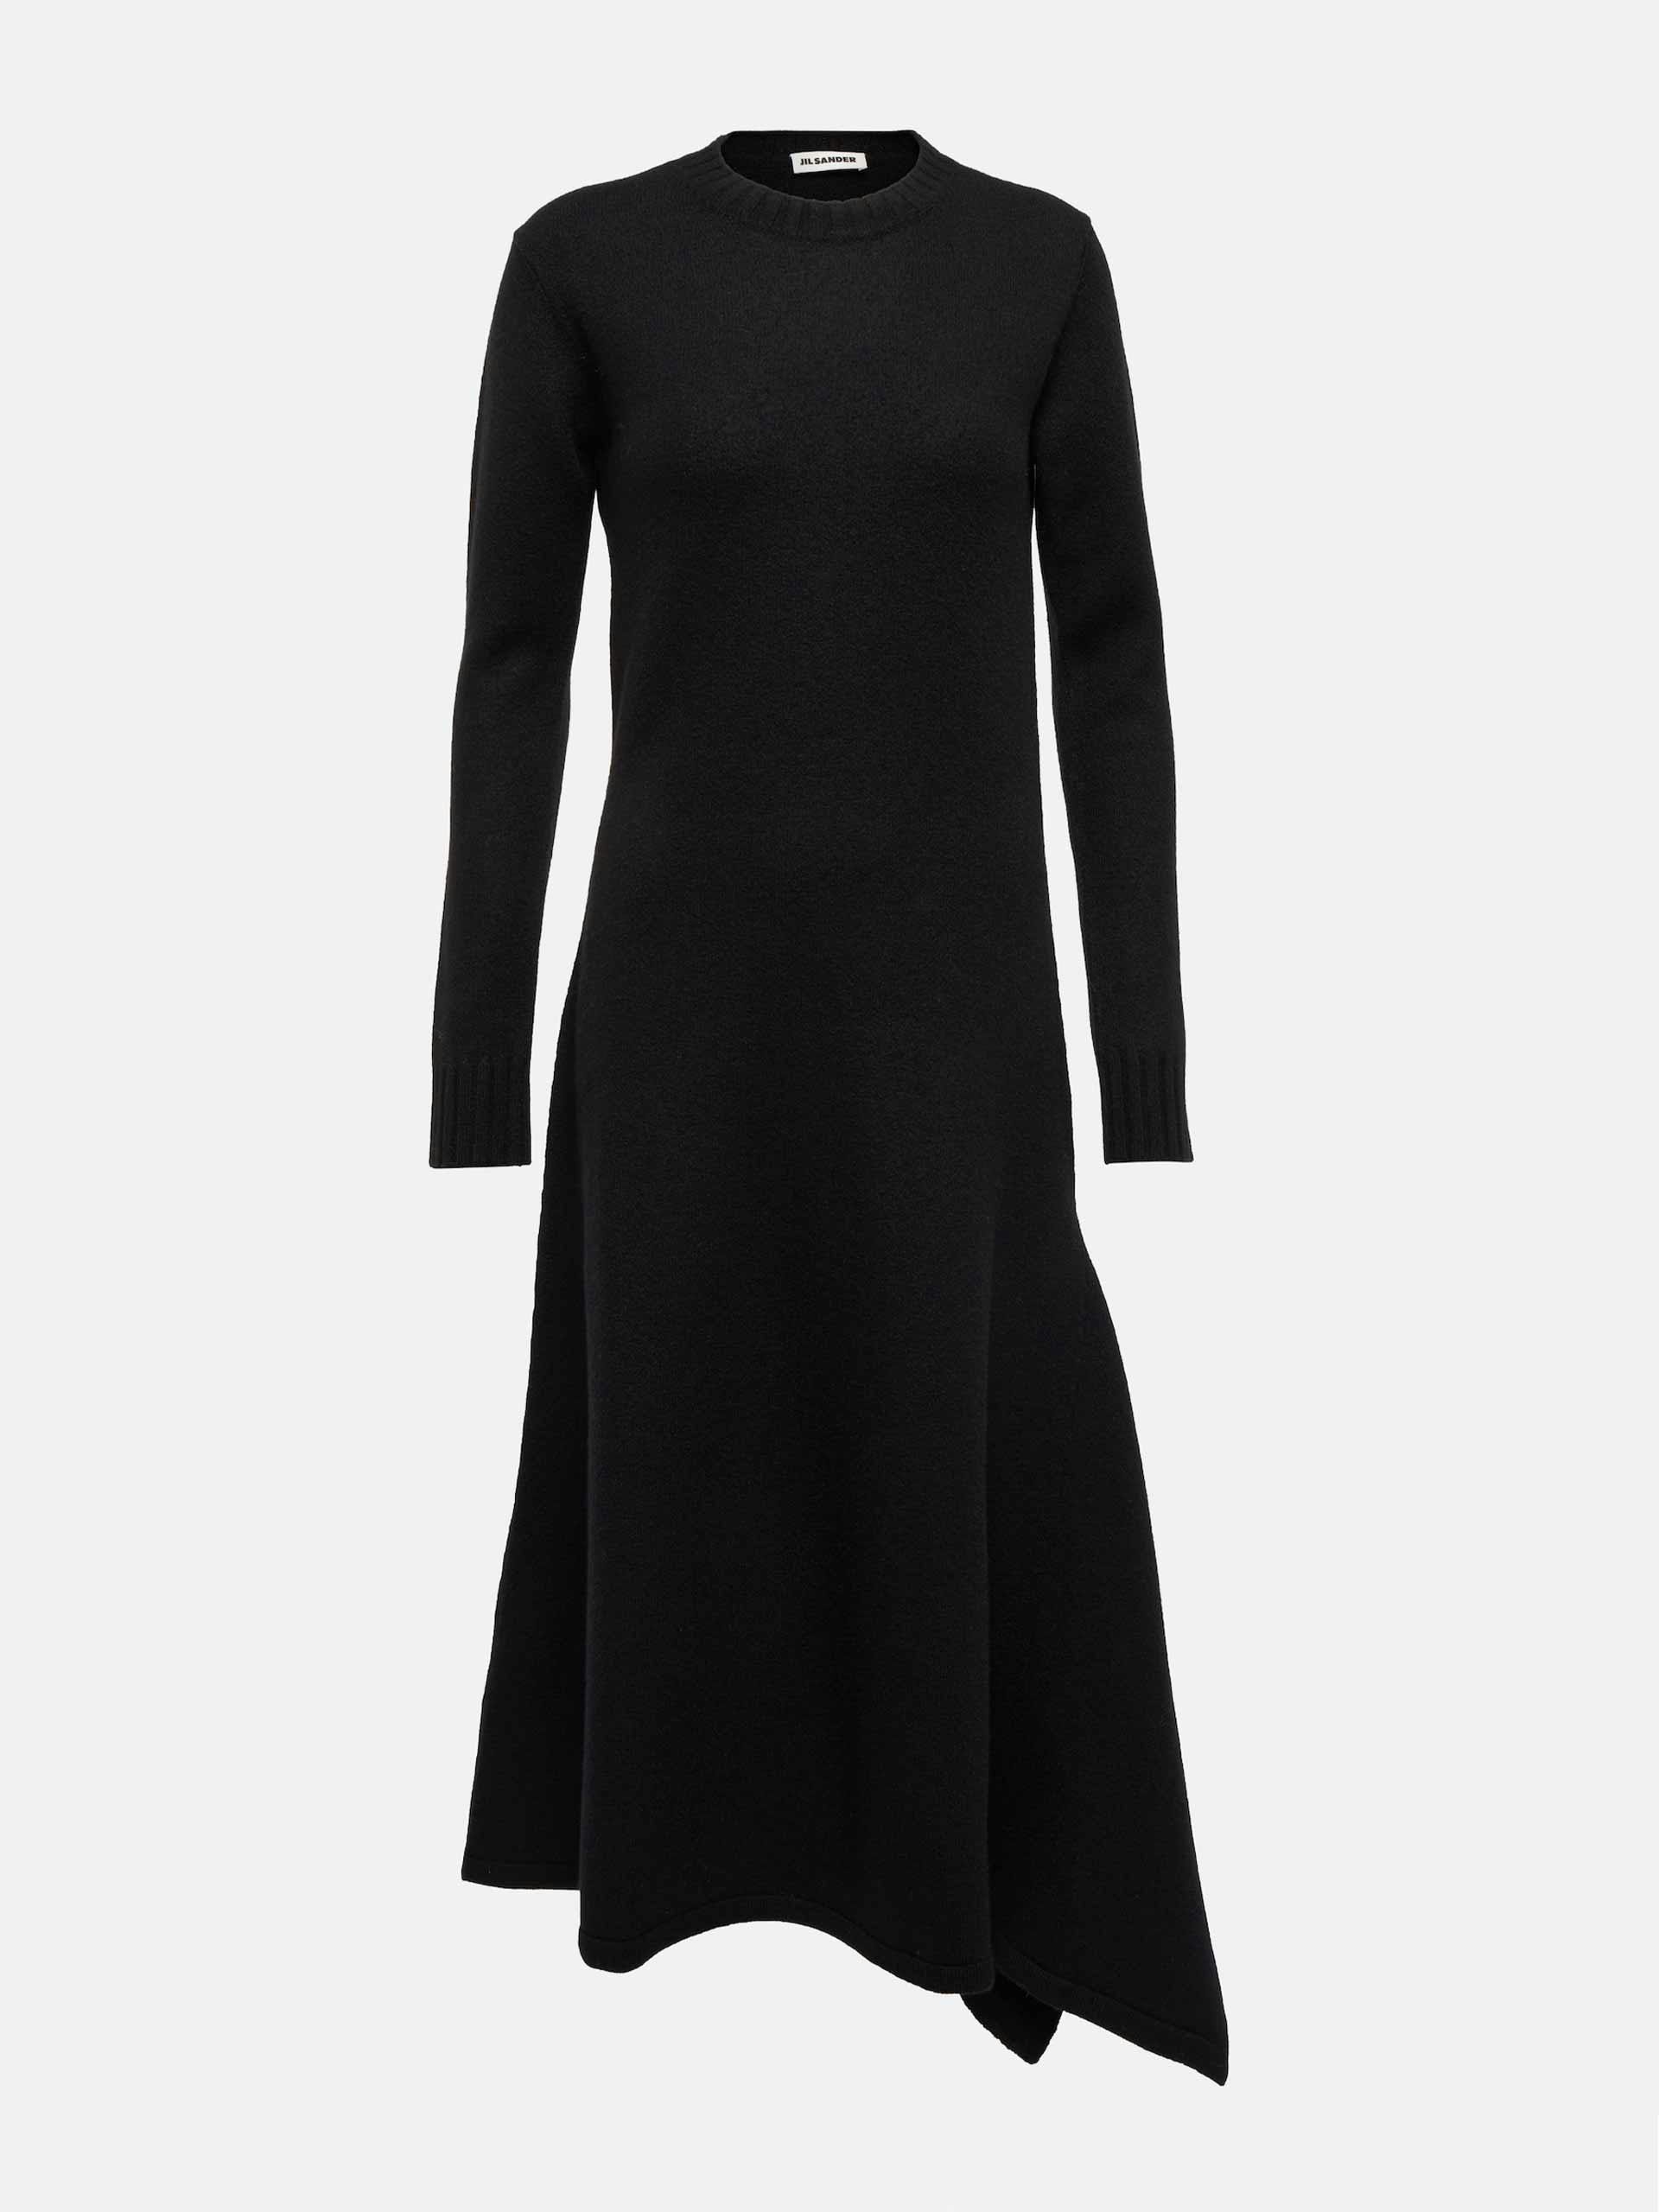 Asymmetrical wool dress